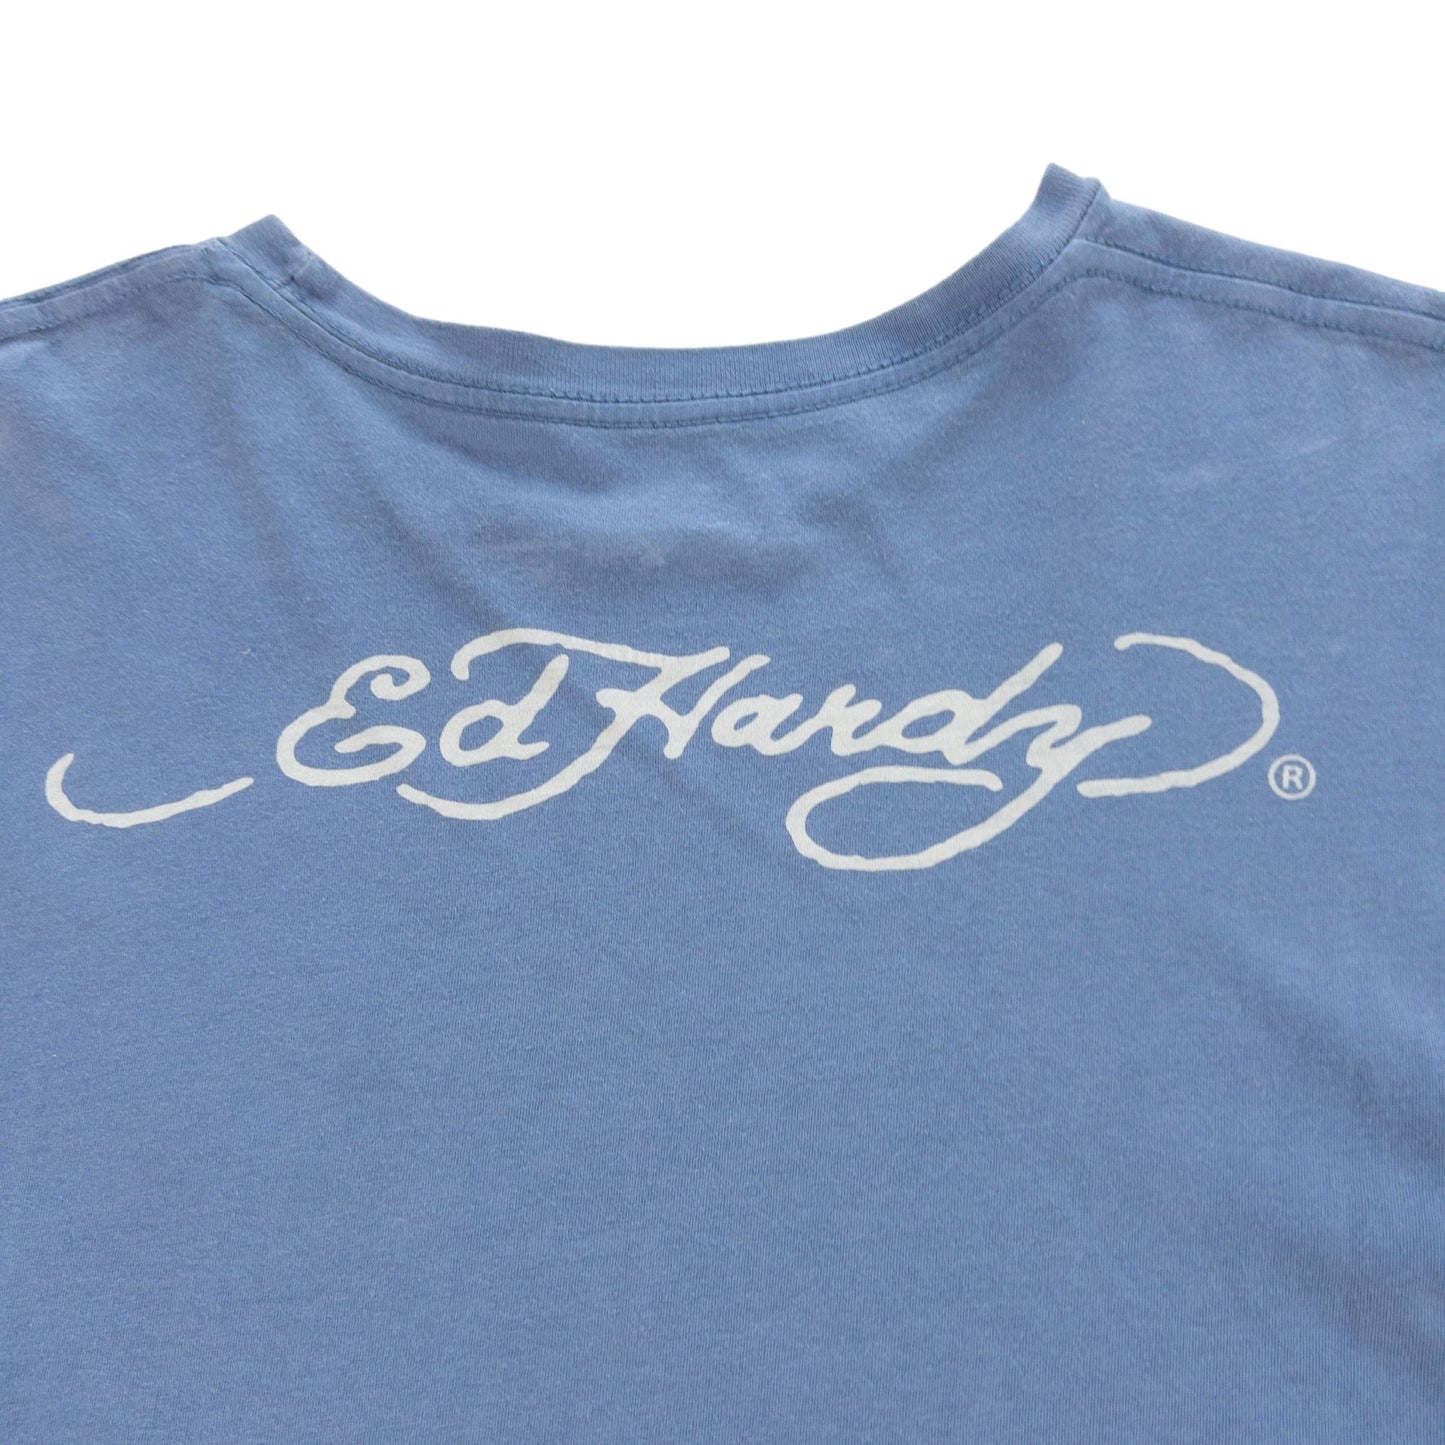 Ed Hardy T Shirt Size XL